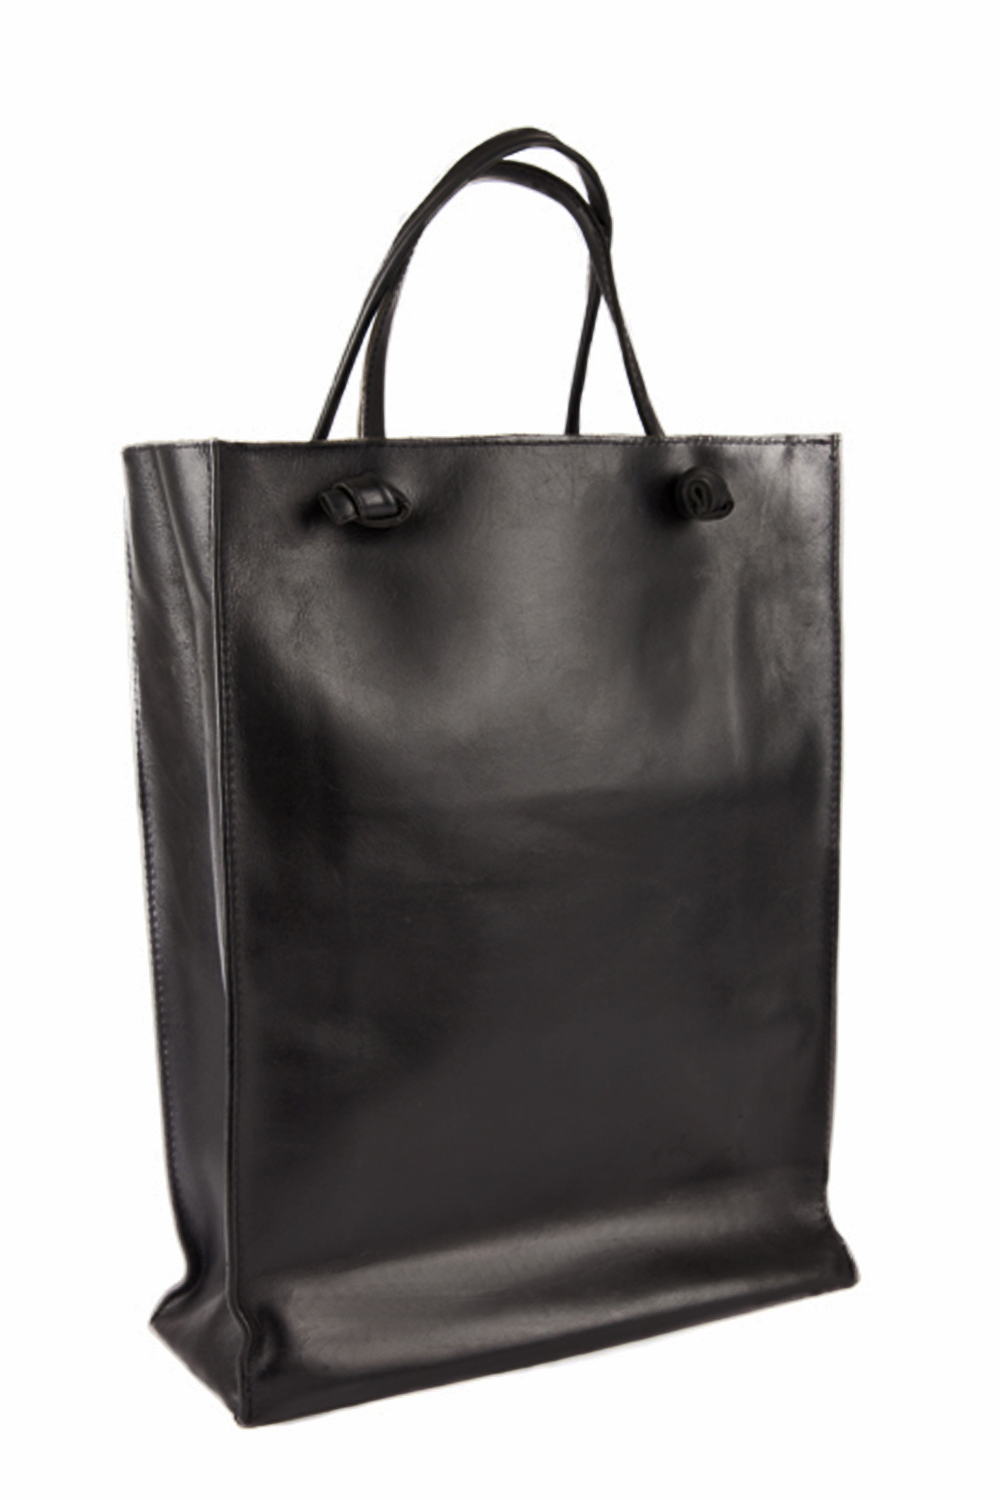 Leather tote ‘Grocery bag’ Black - Studio EVA D.